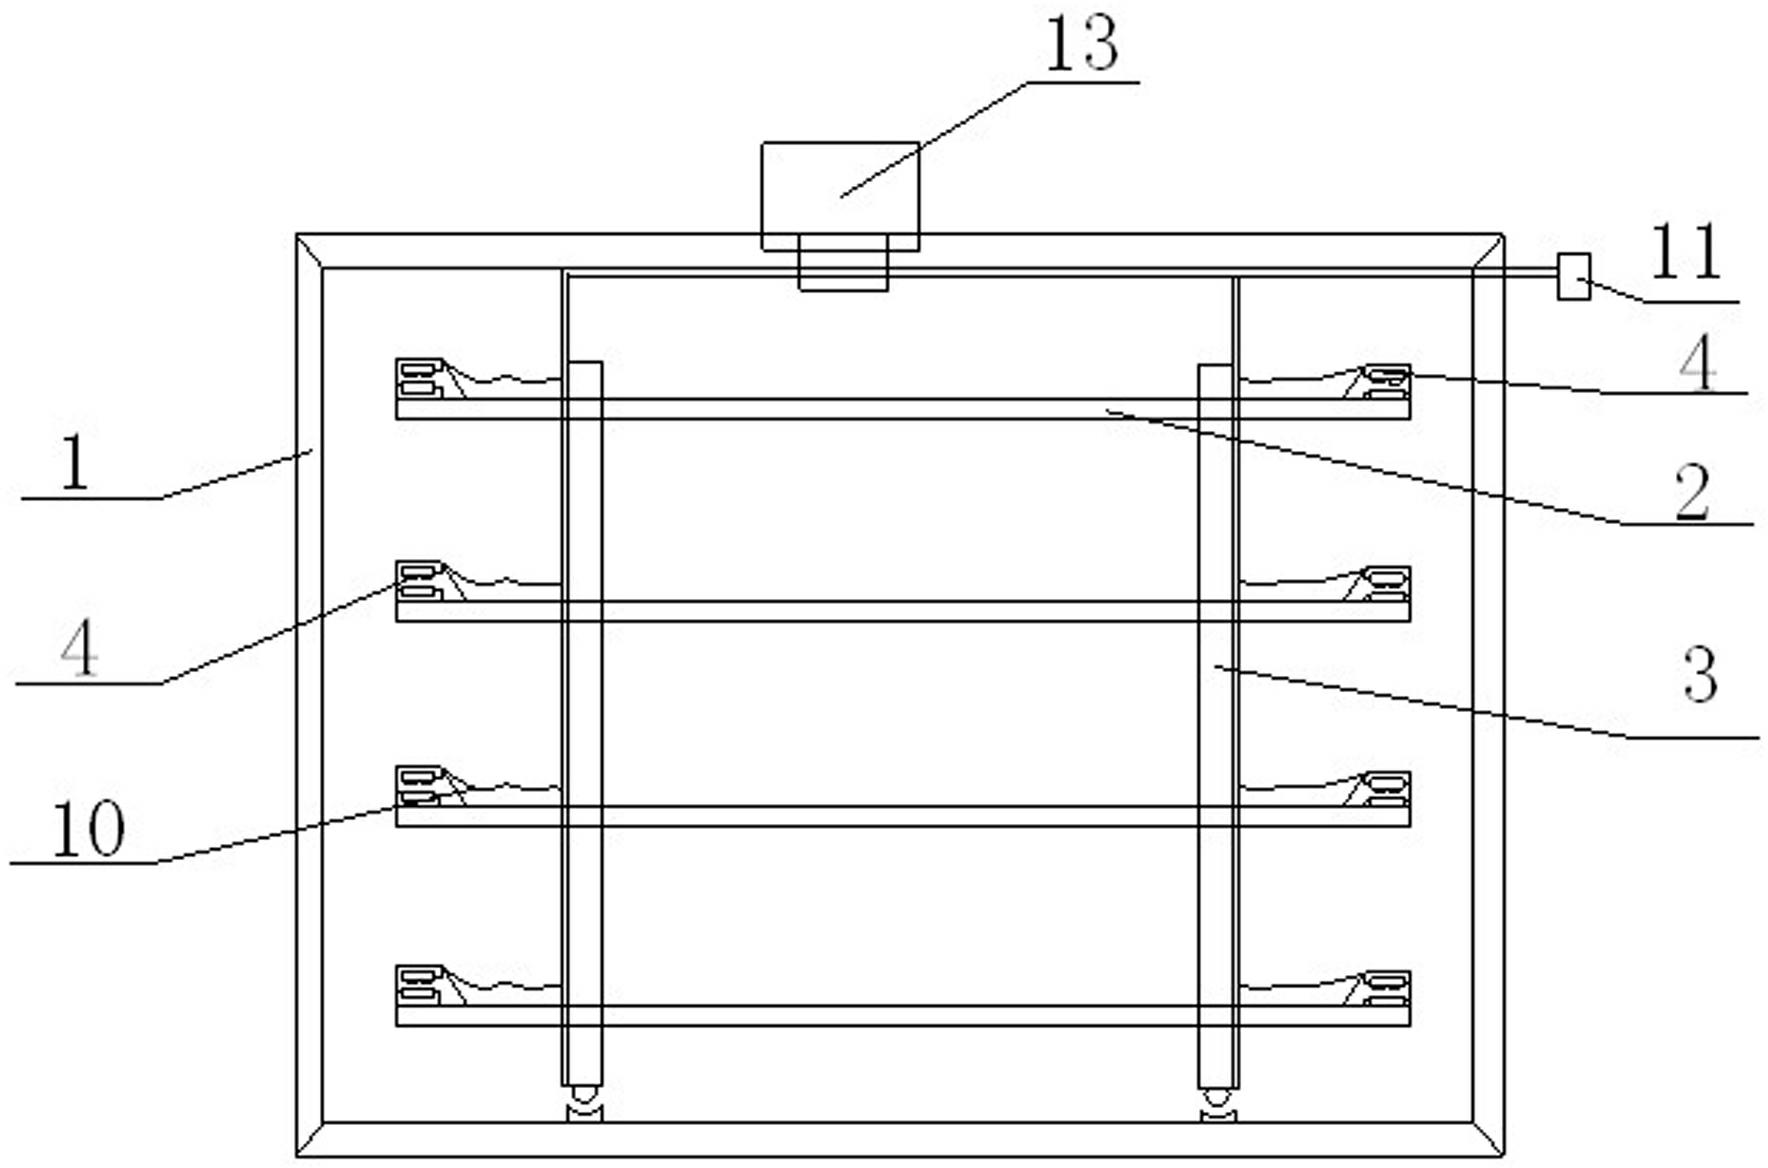 Vacuum heat insulation panel air pressure sealing machine and sealing process for sealing vacuum heat insulation panel utilizing same